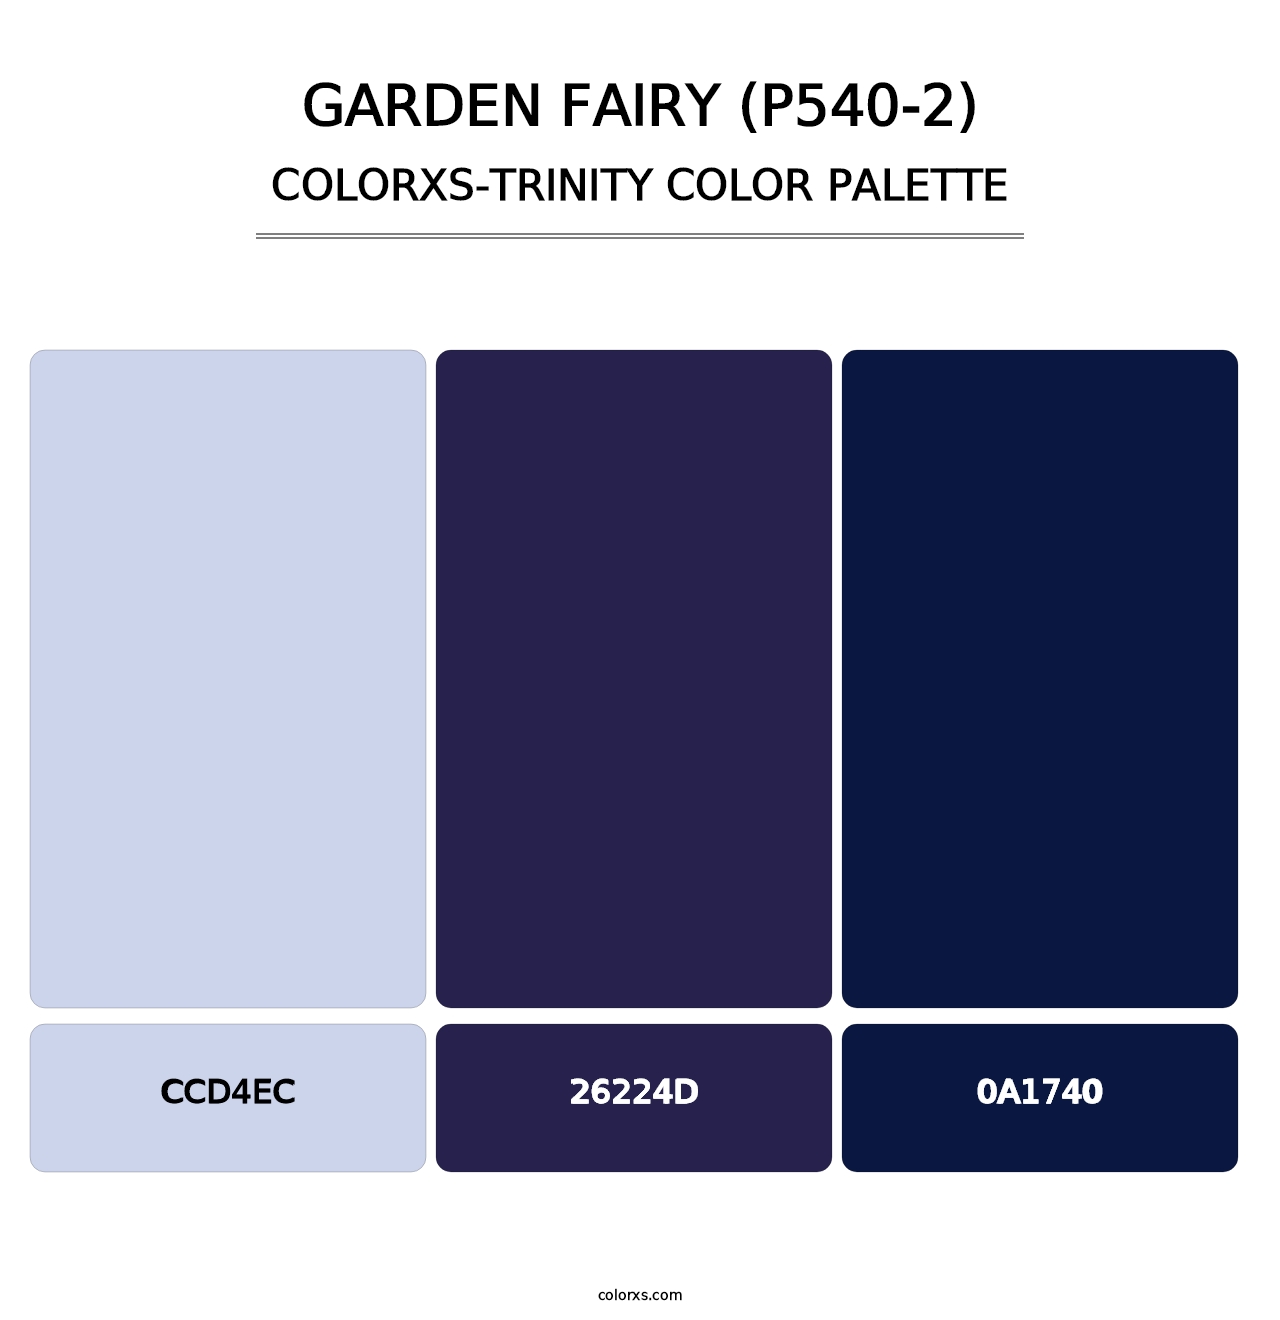 Garden Fairy (P540-2) - Colorxs Trinity Palette